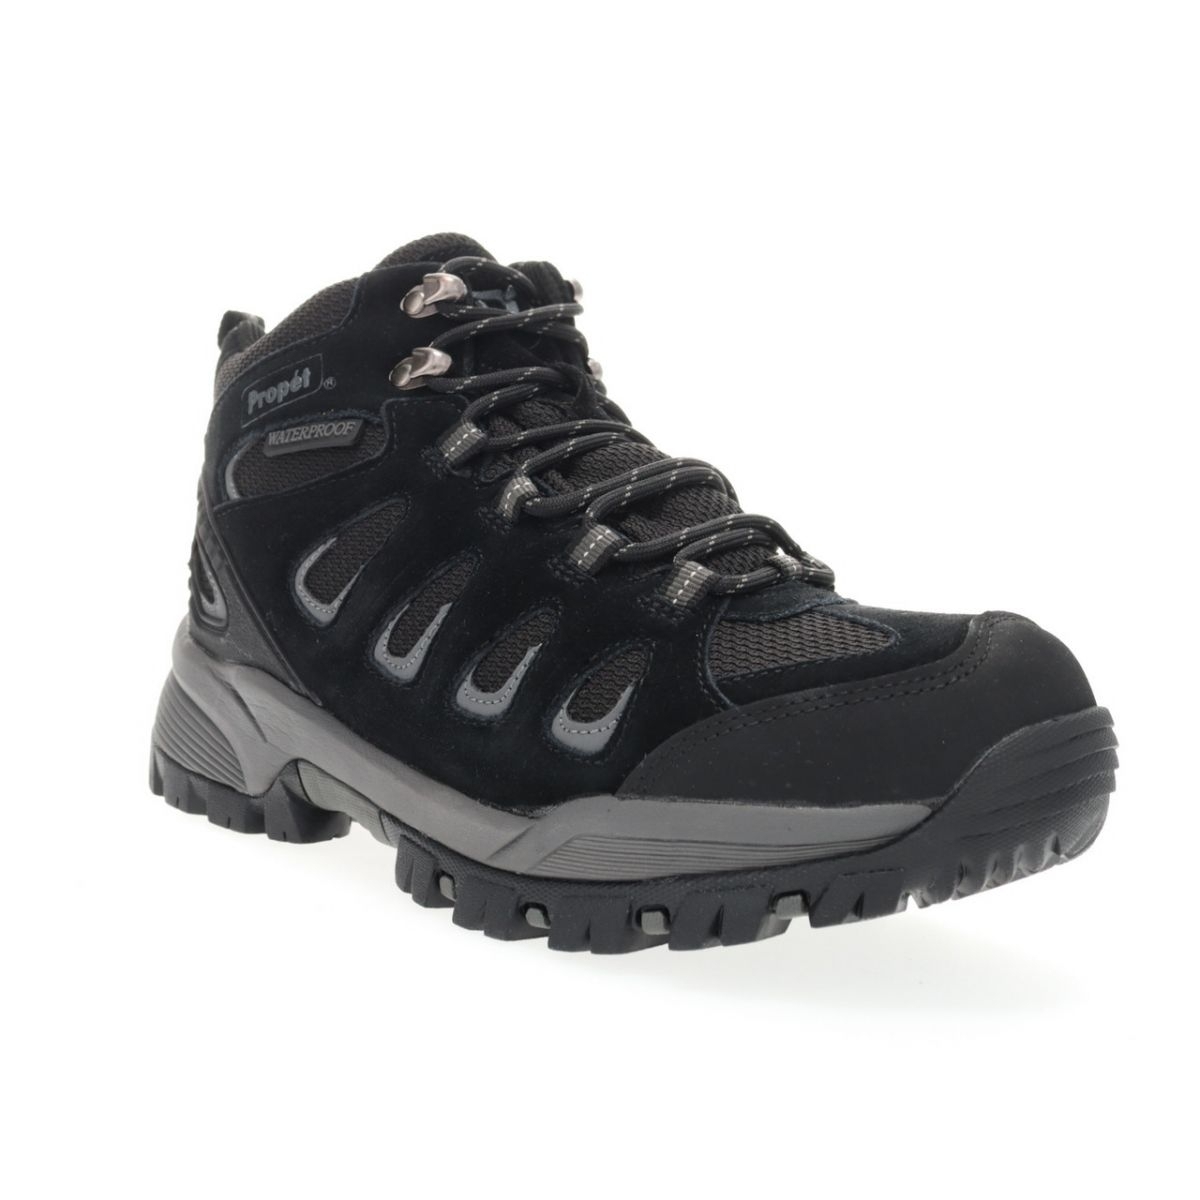 Propet Men's Ridge Walker Hiking Boot Black - M3599B 8 XX US Men BLACK - BLACK, 11.5 X-Wide